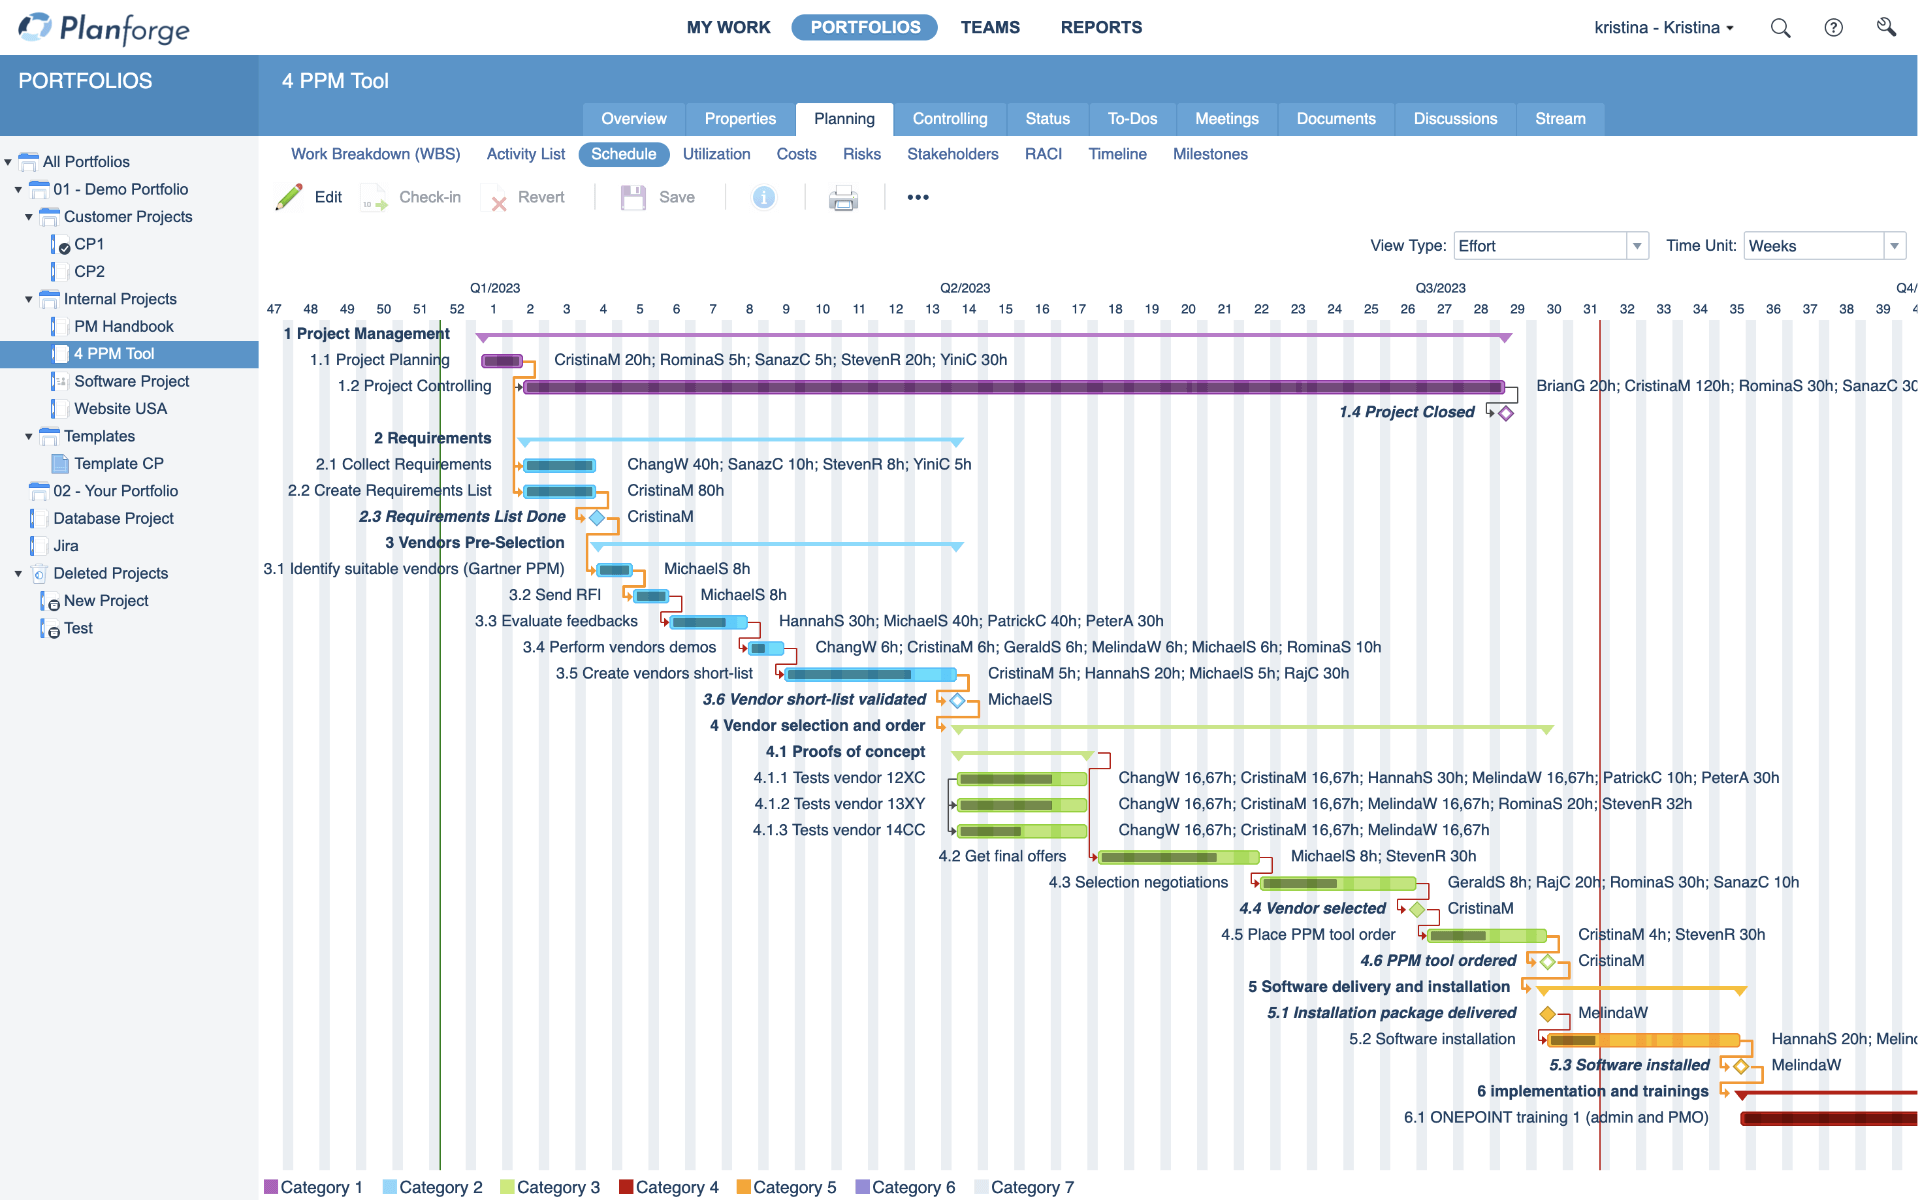 Gantt Chart Software by Planforge